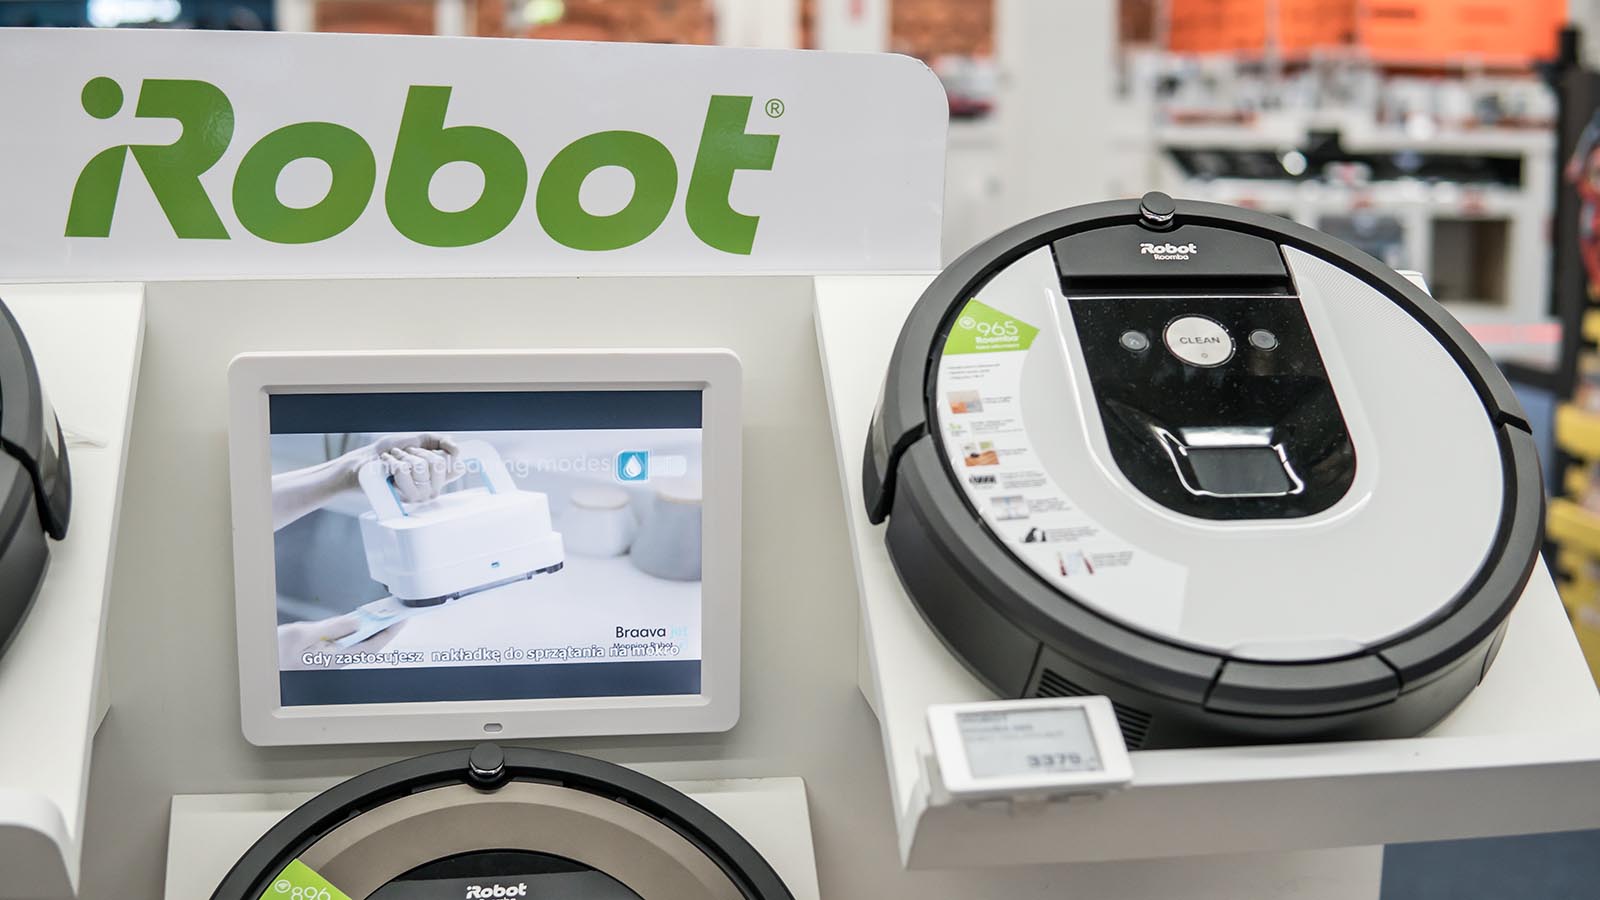 An iRobot (IRBT stock) Roomba inside Saturn electronic store